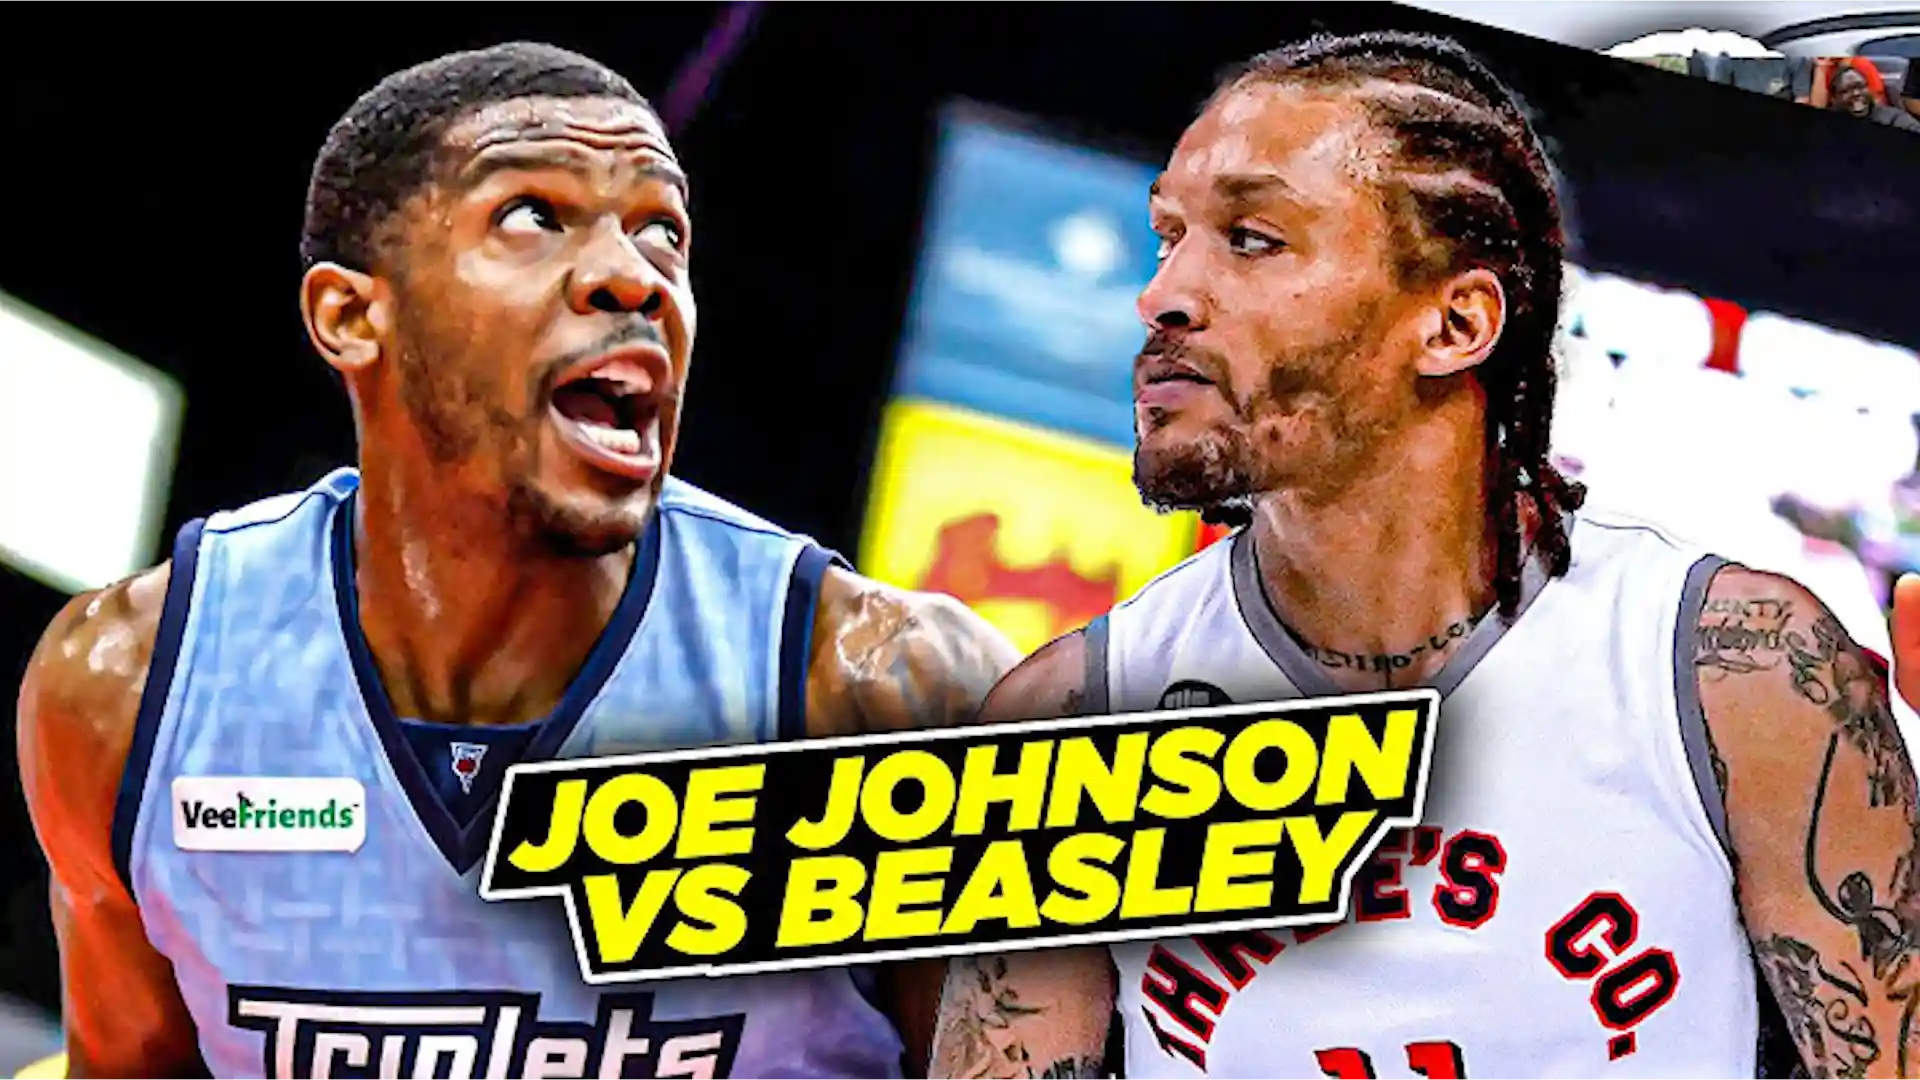 Michael Beasley vs Joe Johnson CRAZY Battle at The Big 3 | 3's Company vs Triplets